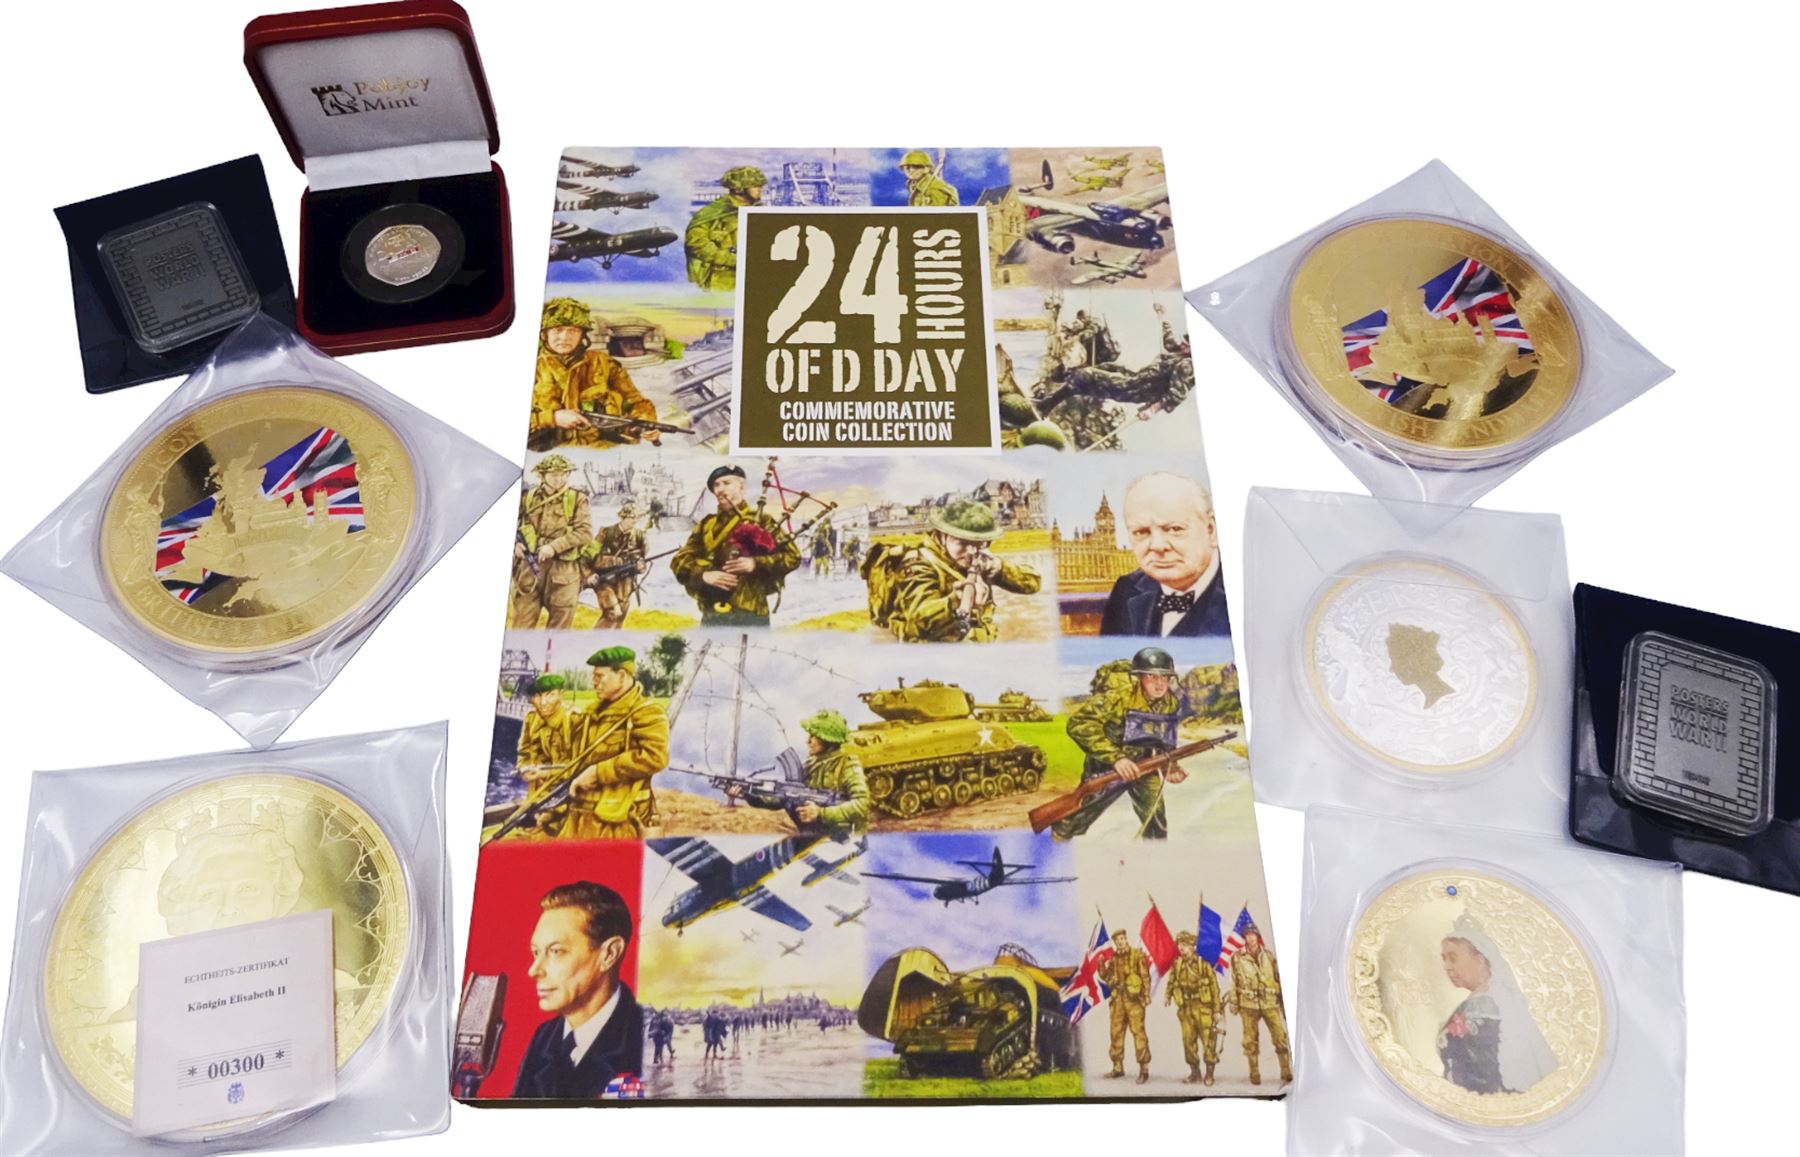 Twenty-four Hours of D-Day commemorative coin collection comprising twenty-four Queen Elizabeth II B